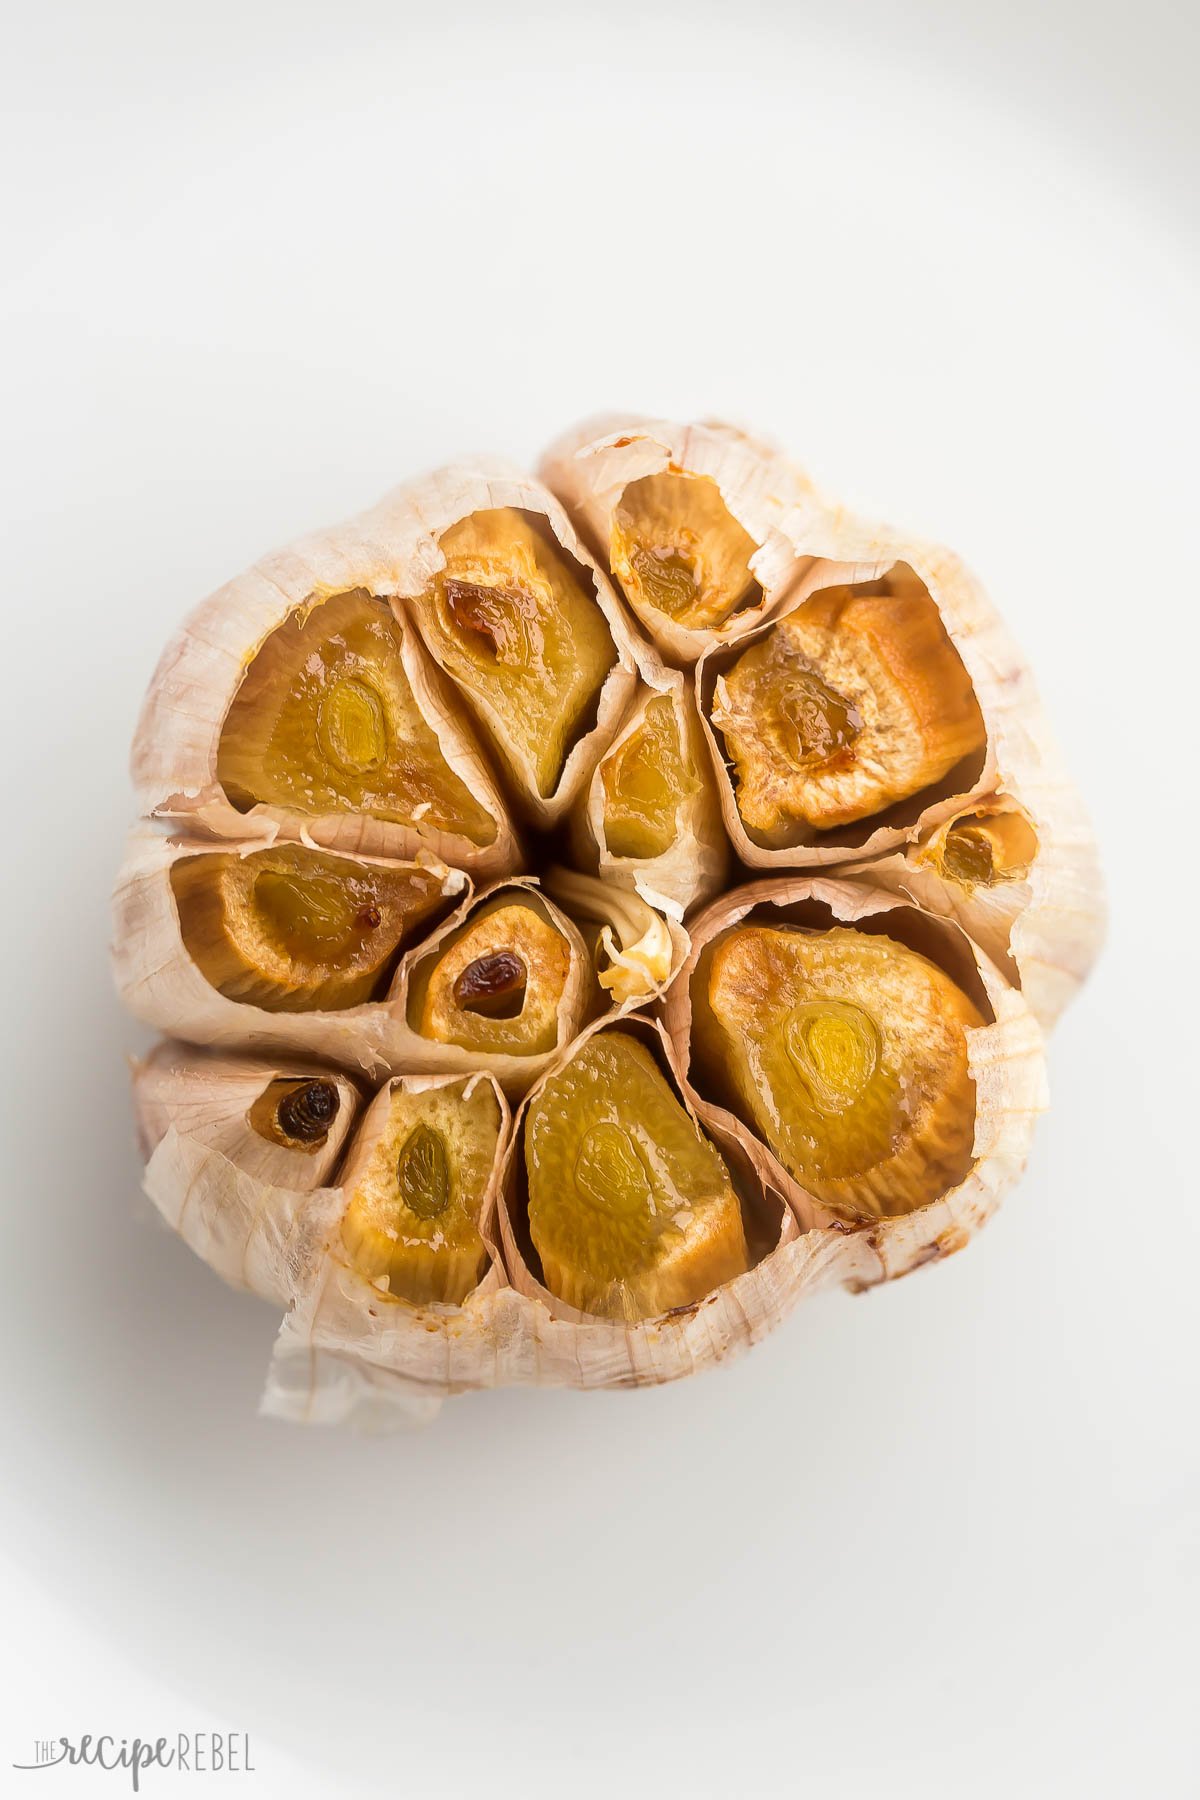 close up overhead image of roasted garlic head